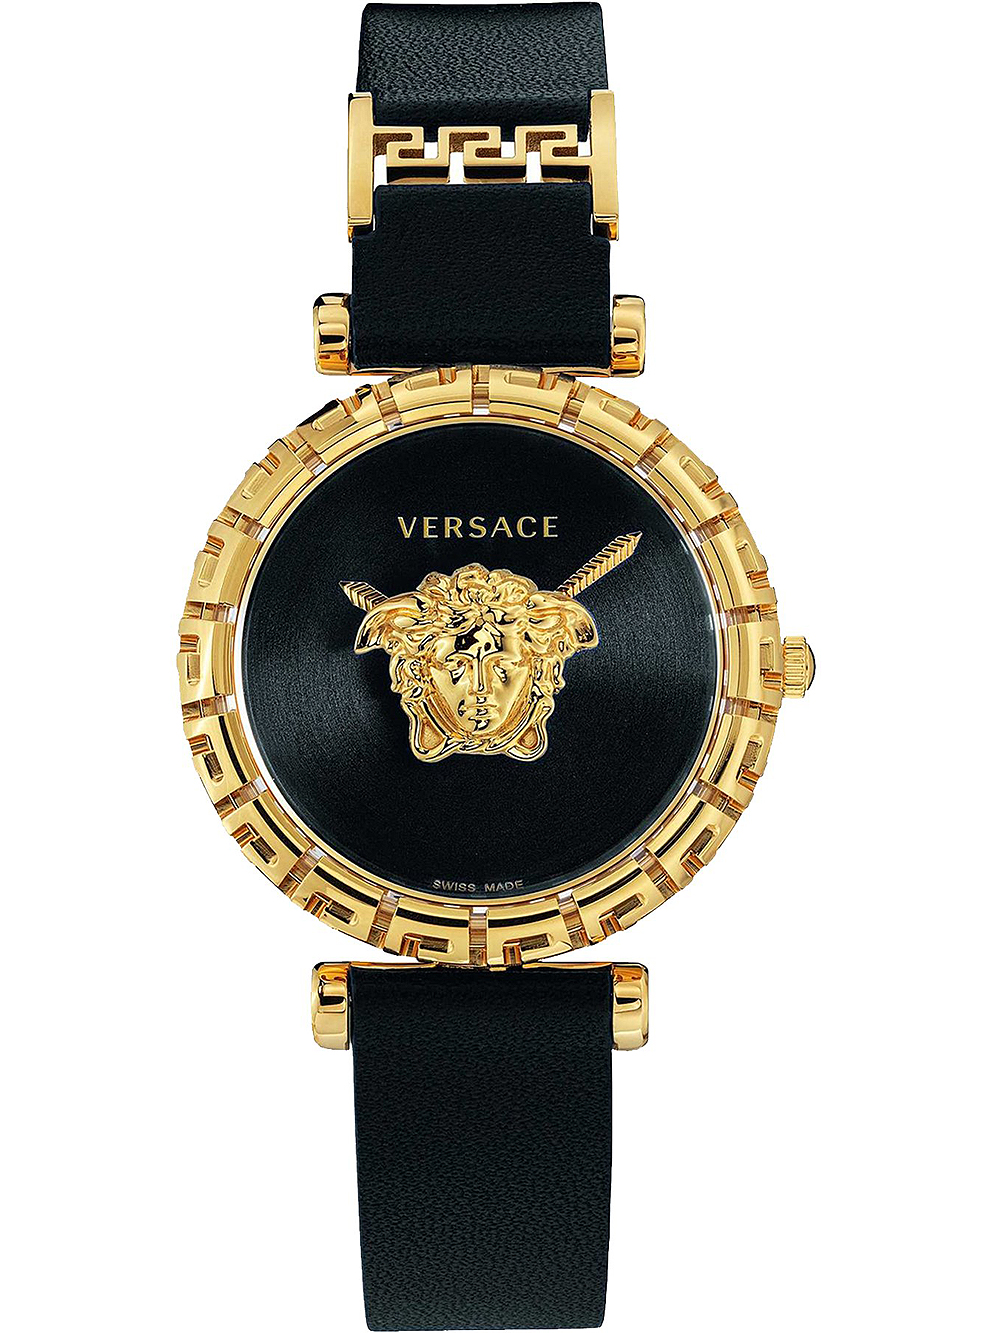 Versace VEDV00119 Palazzo Empire Damenuhr 37mm 5ATM  - Onlineshop Timeshop24